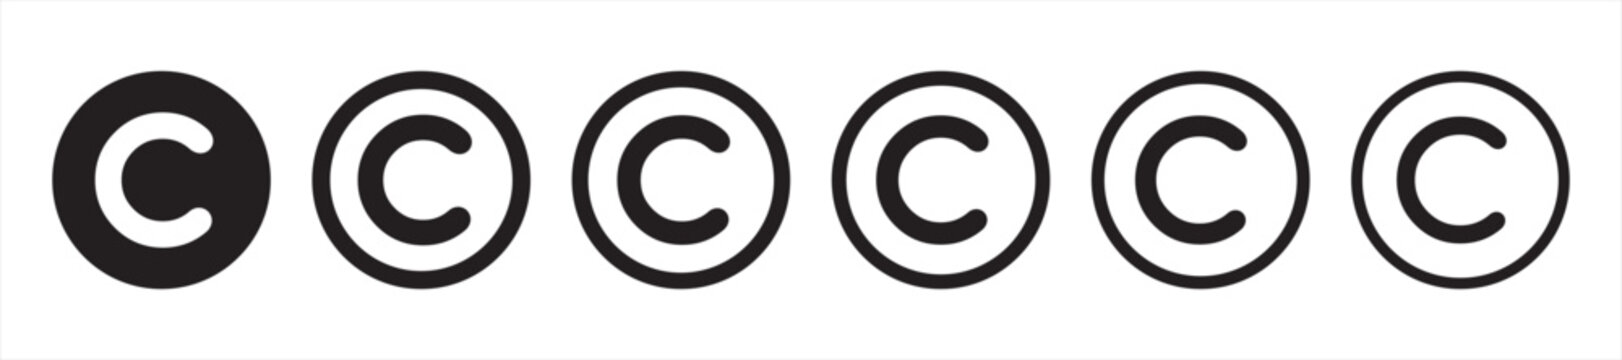 Copyright icon set. copyright symbols. Vector Illustration Eps10